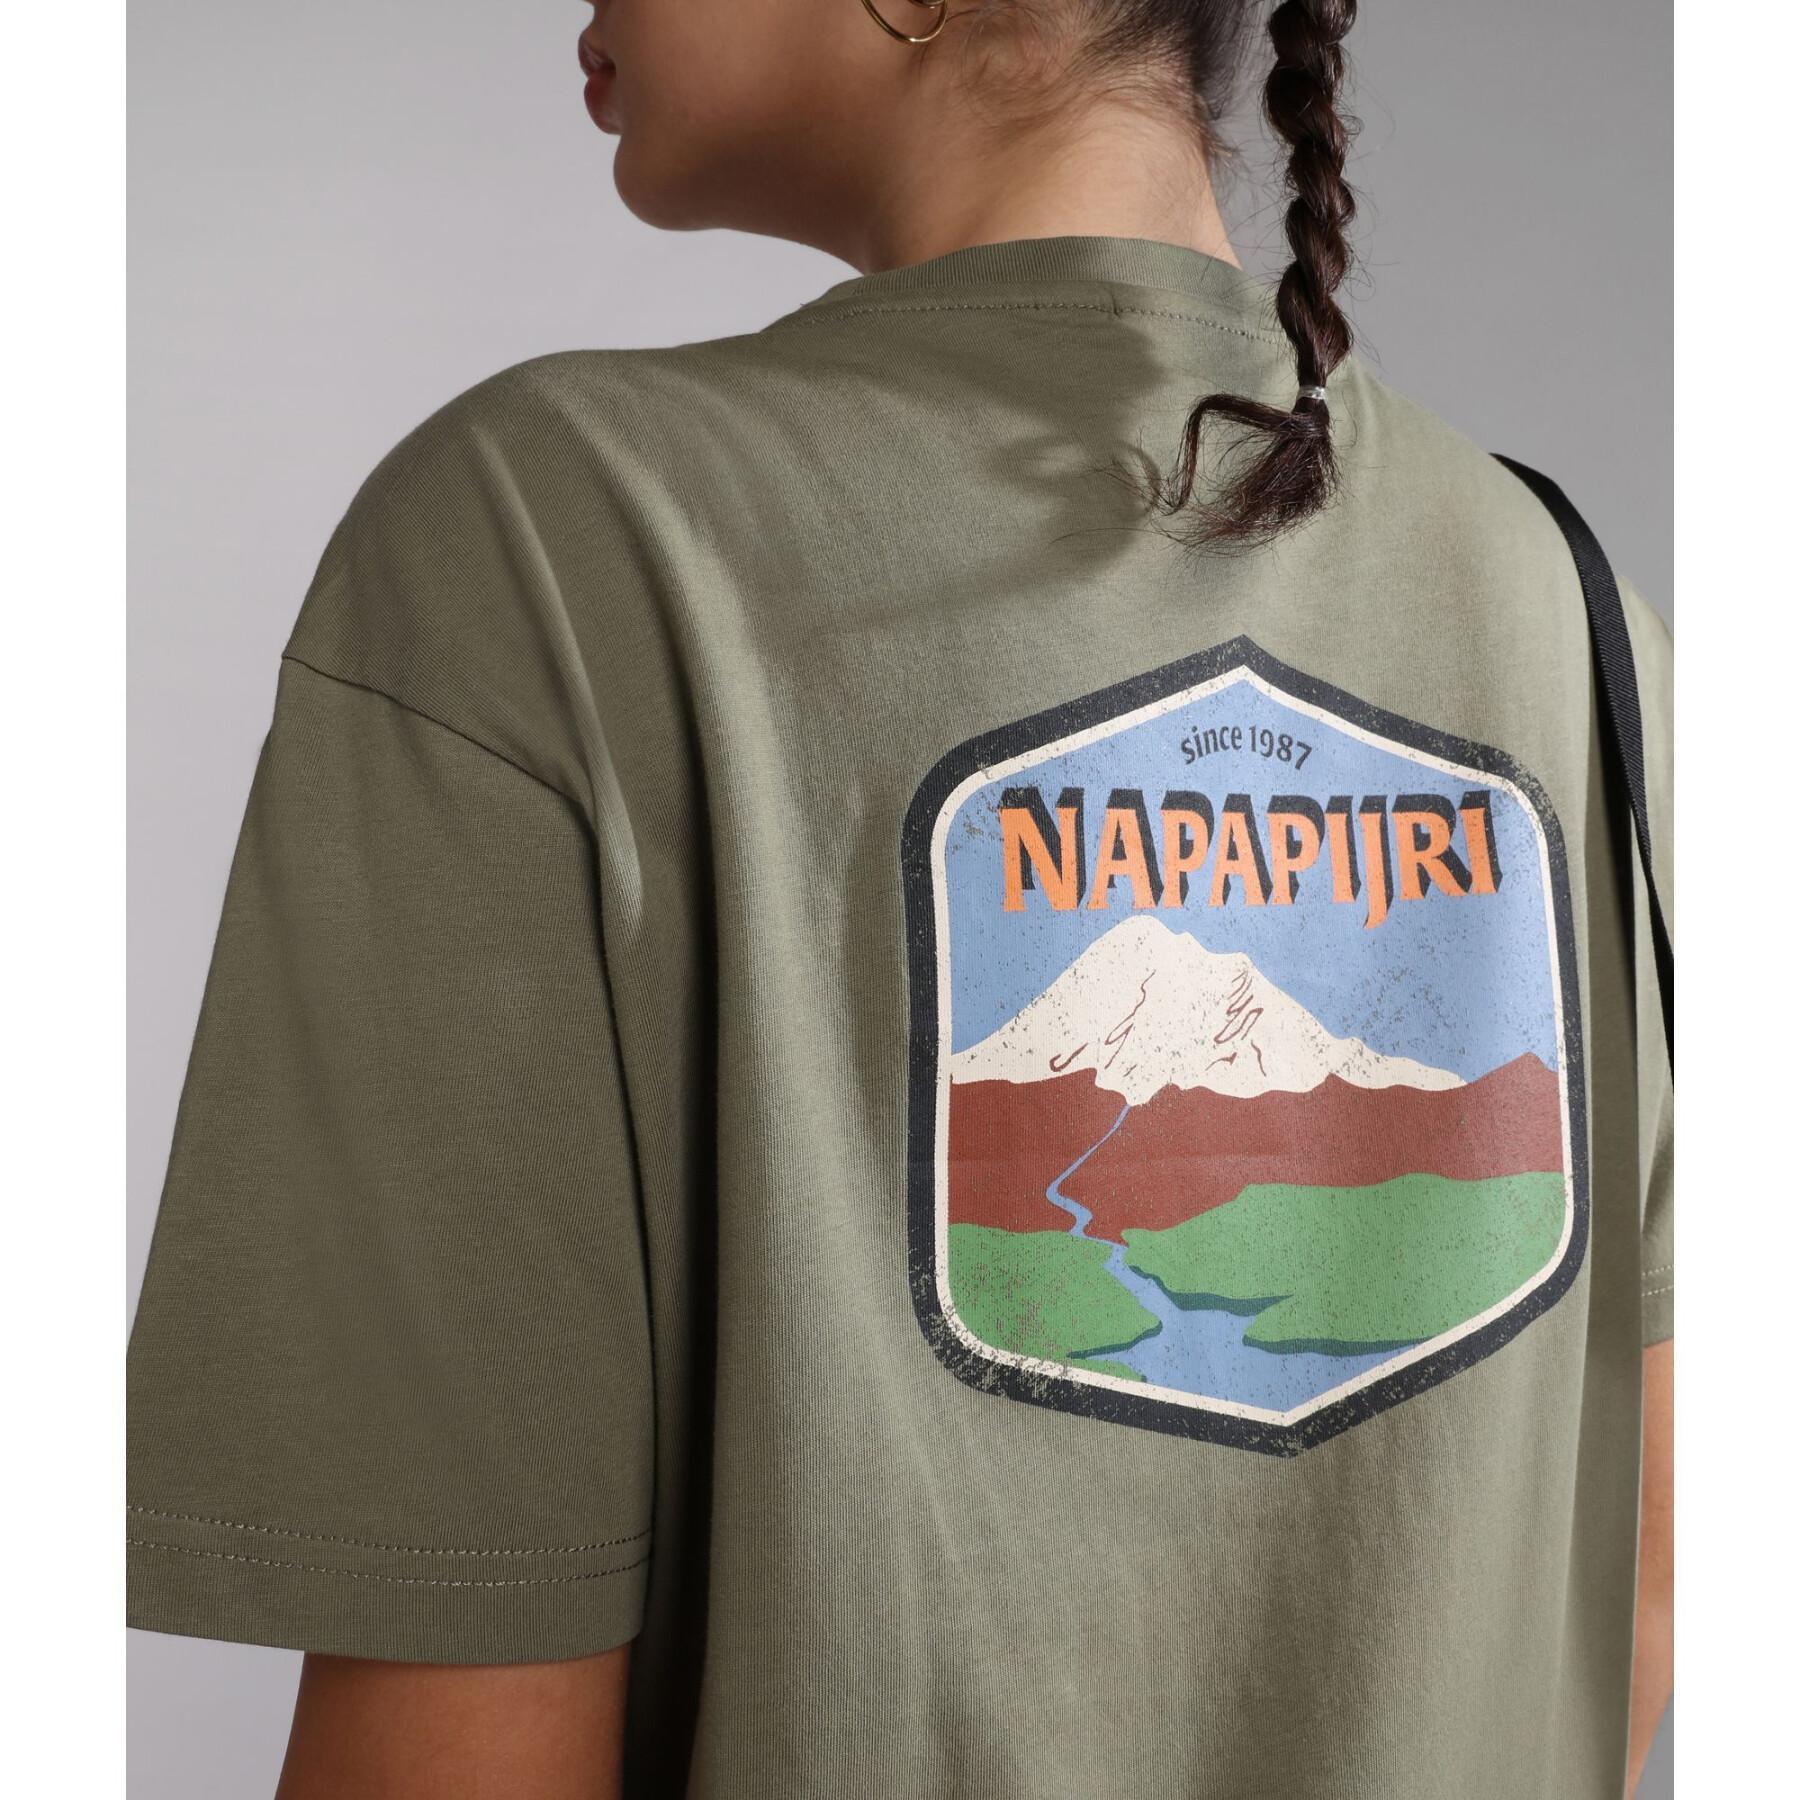 Camiseta Napapijri Bolivar